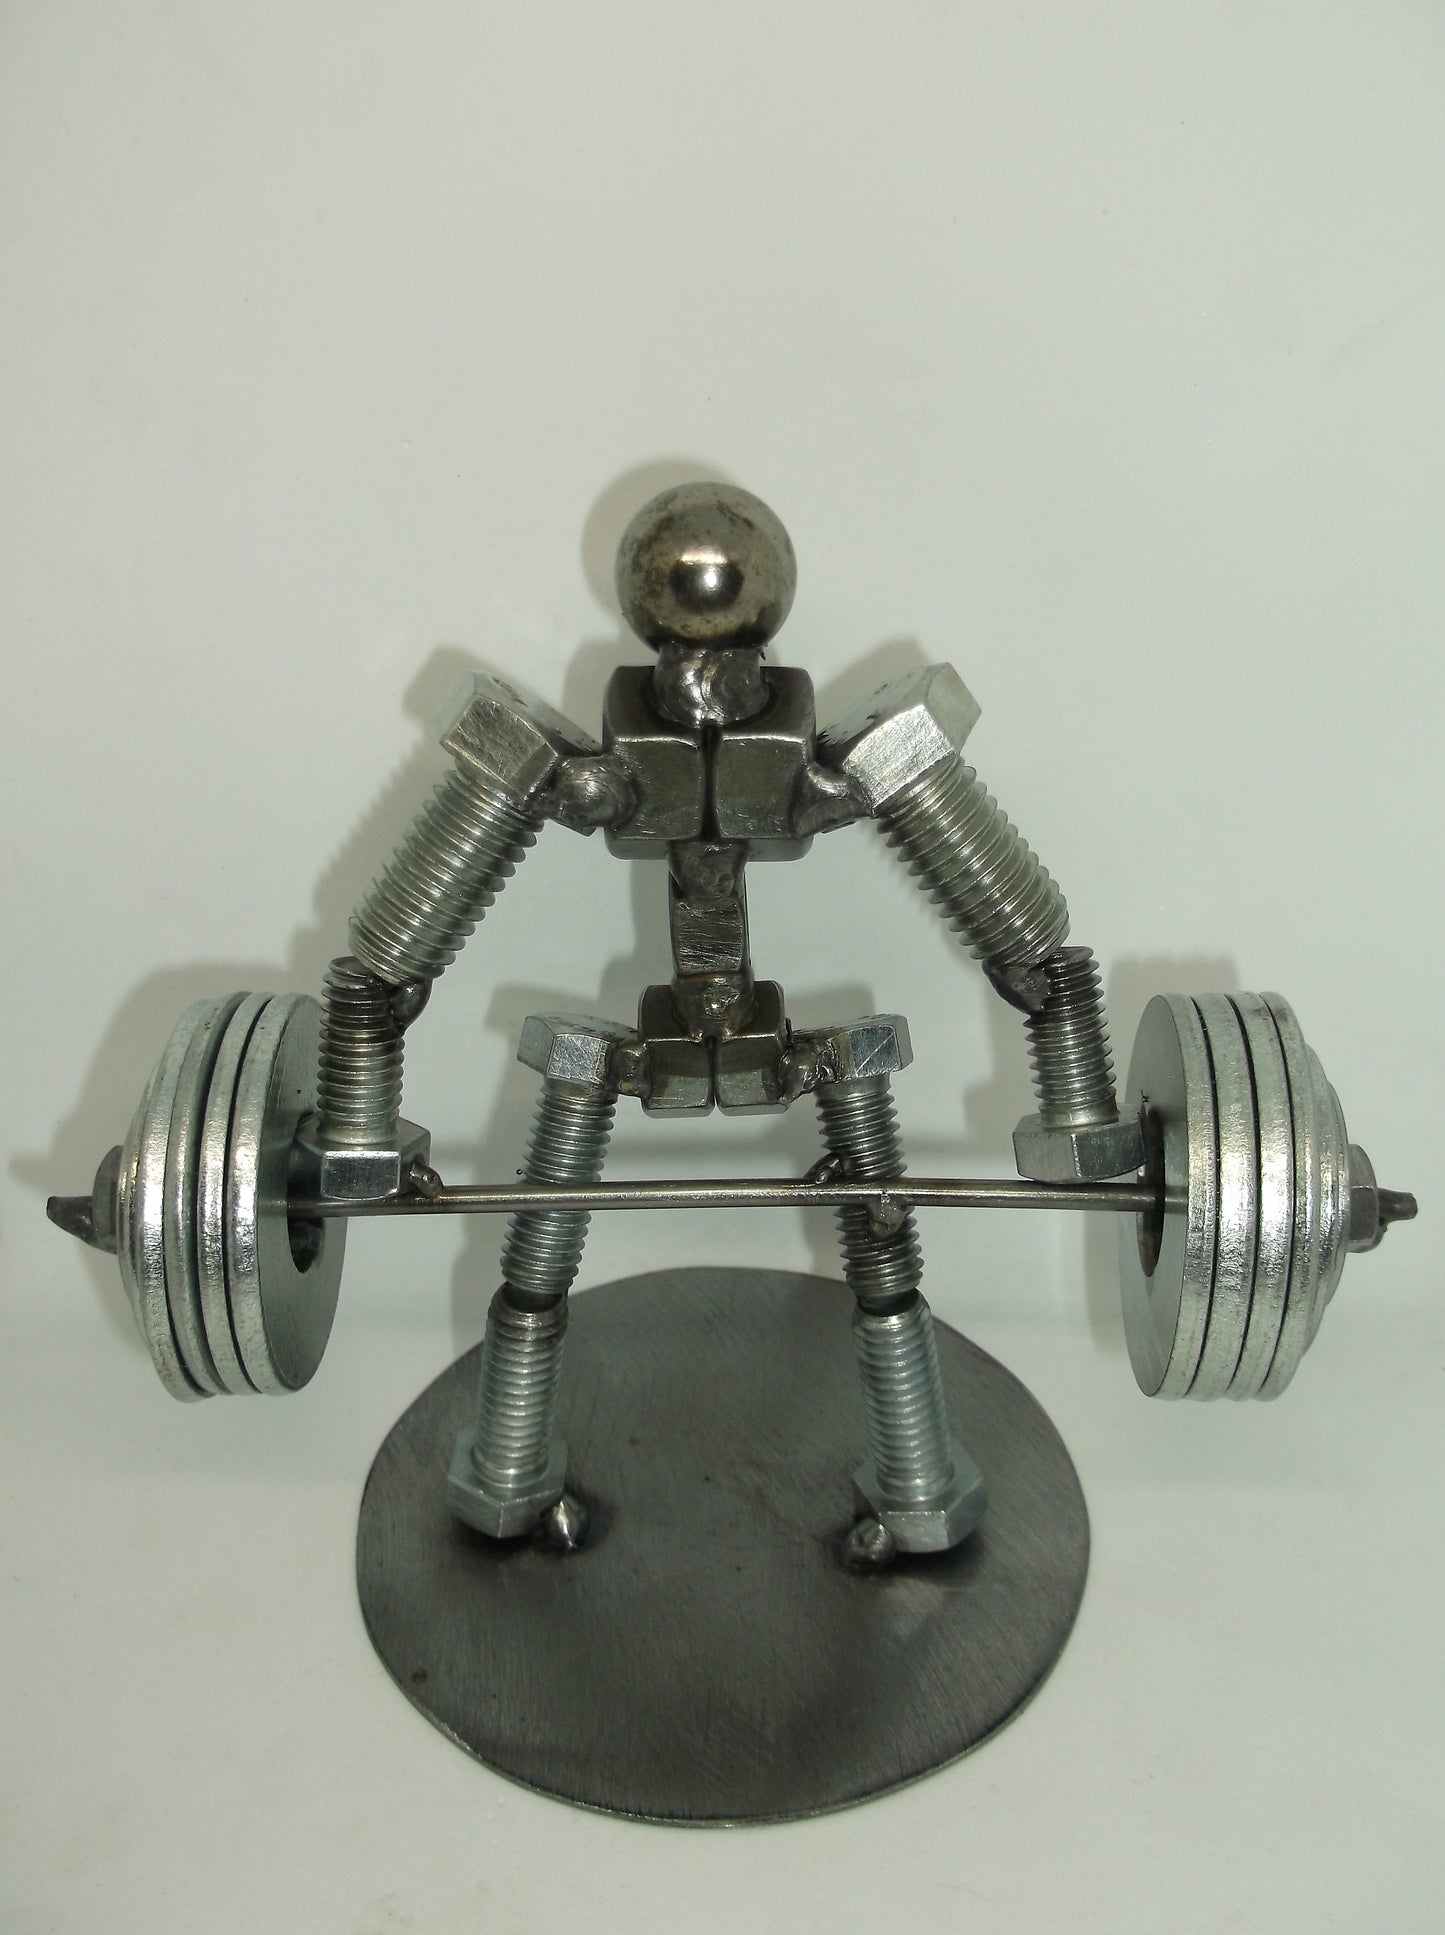 4 Plates Dead Lift Weight Lifter, Metal Bolt Figurine, Athlete